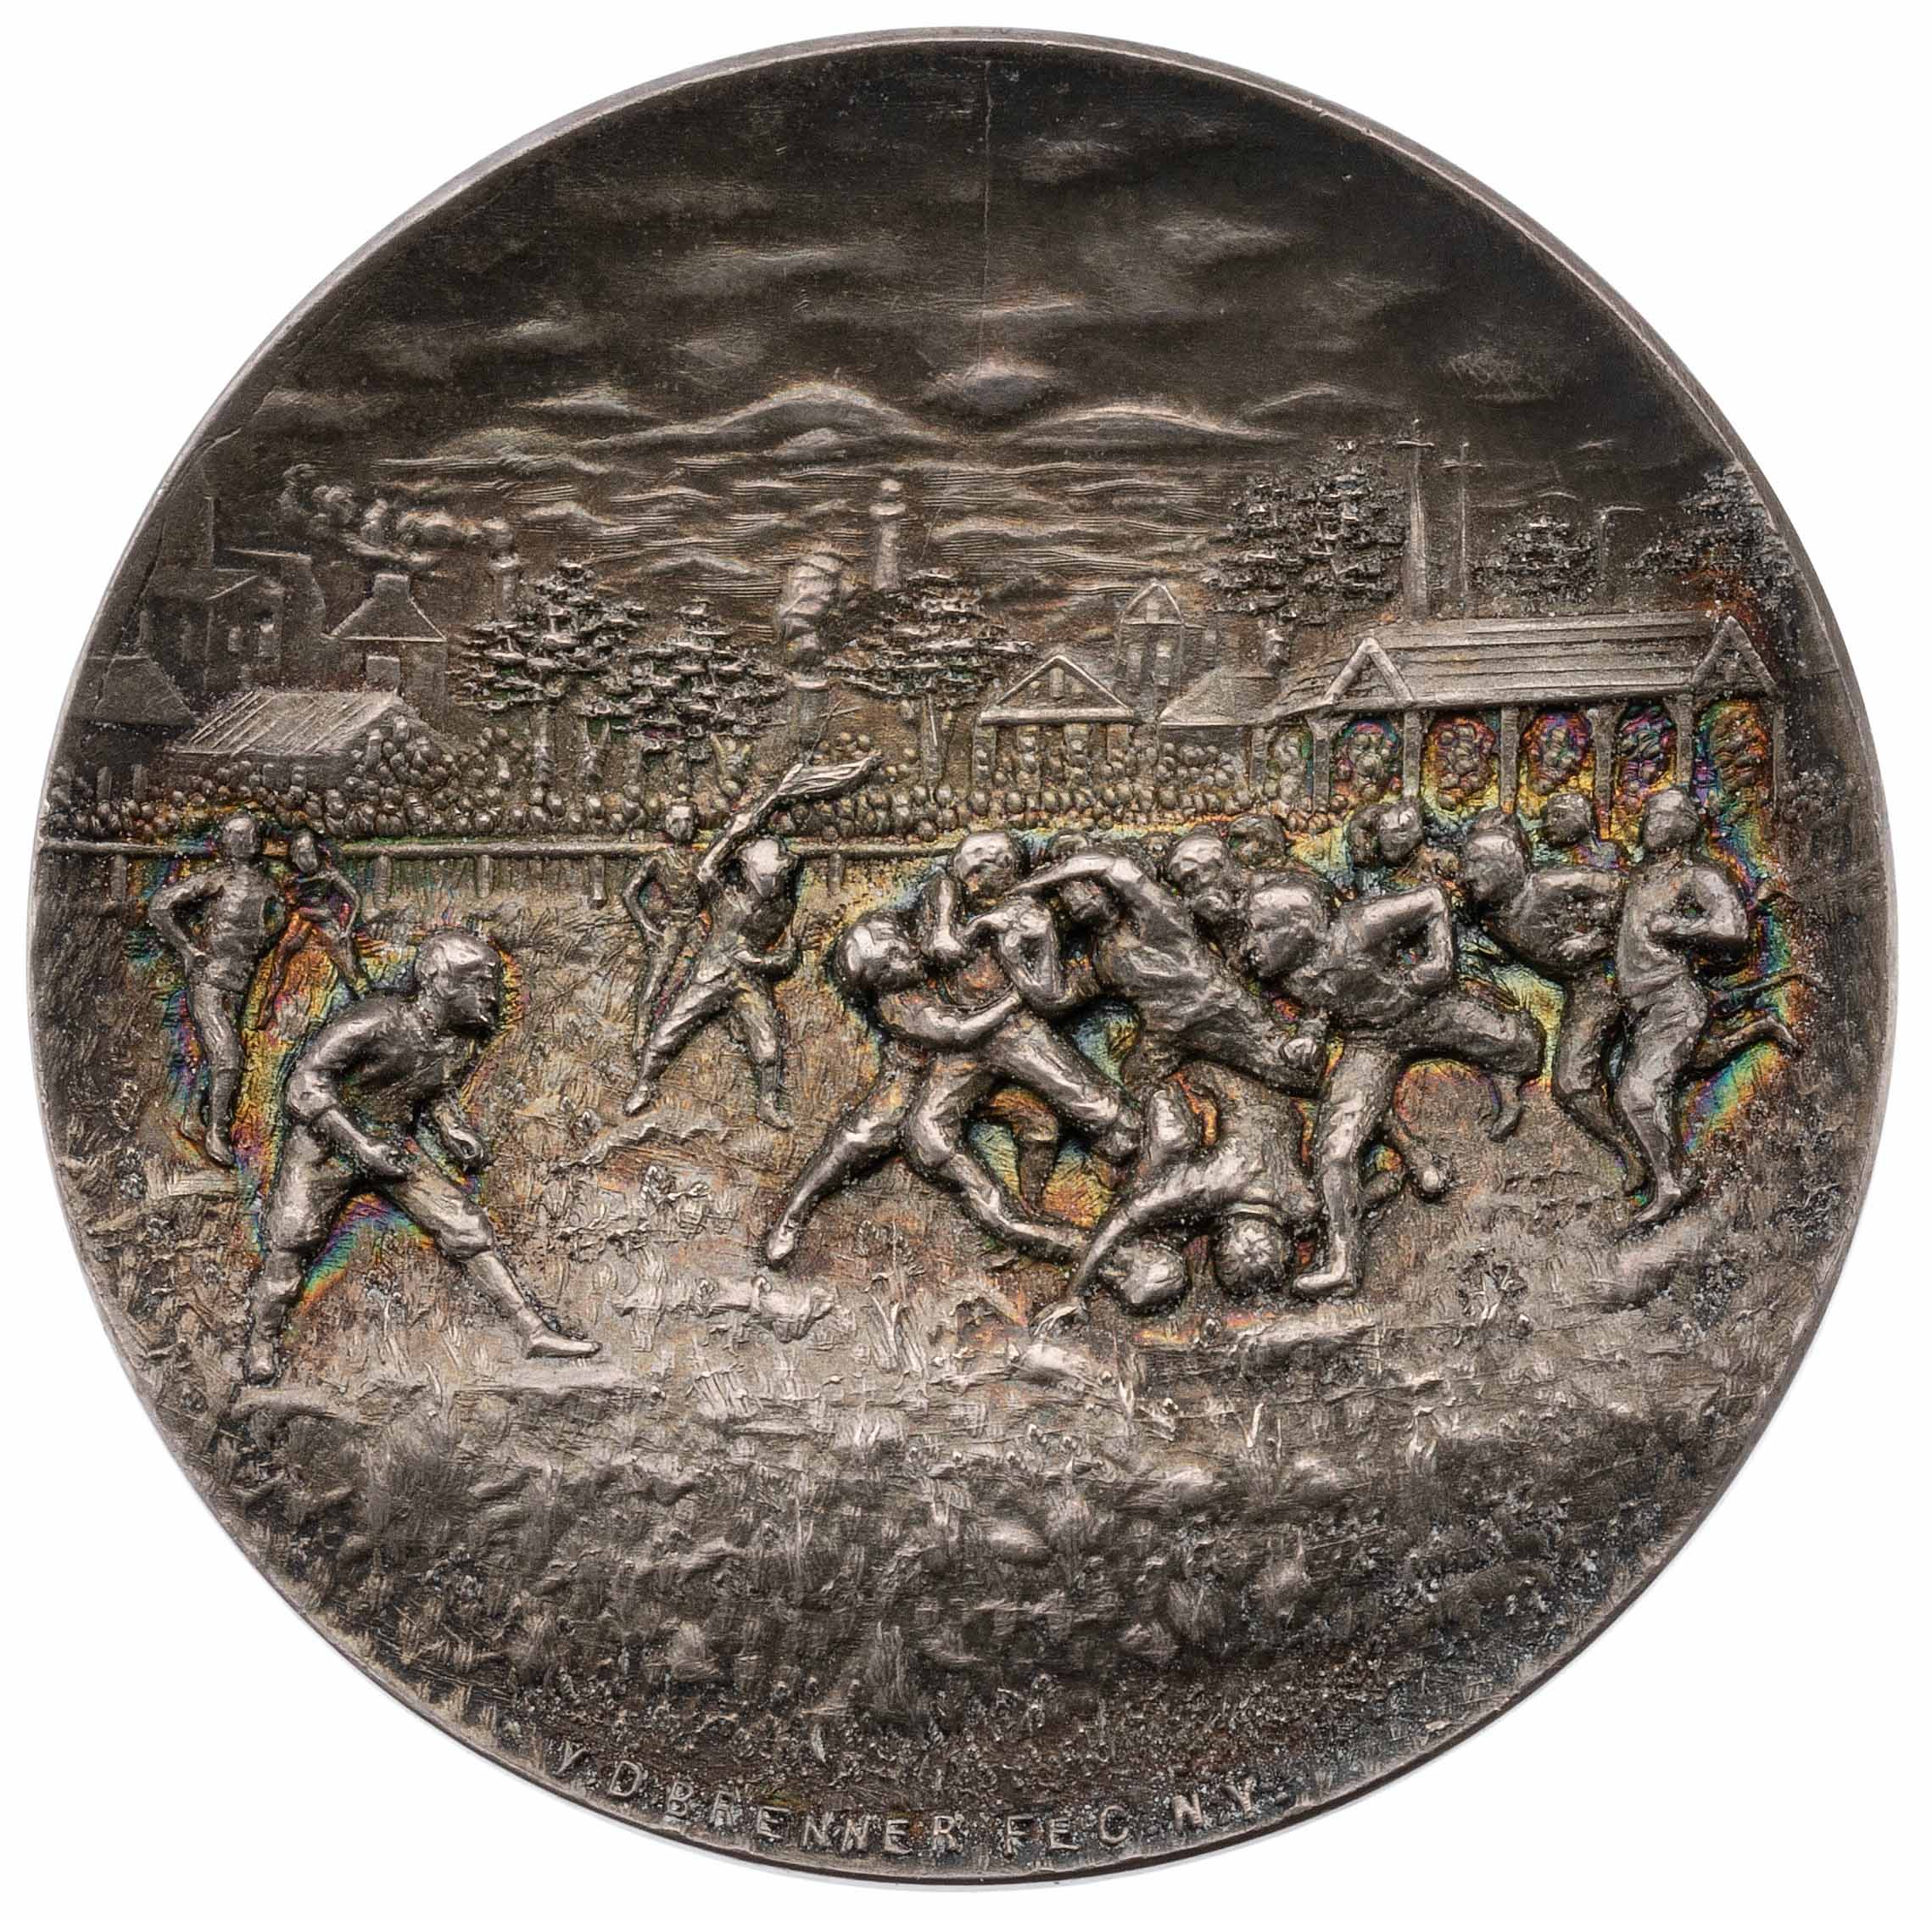 Hahlo-87, Football medal